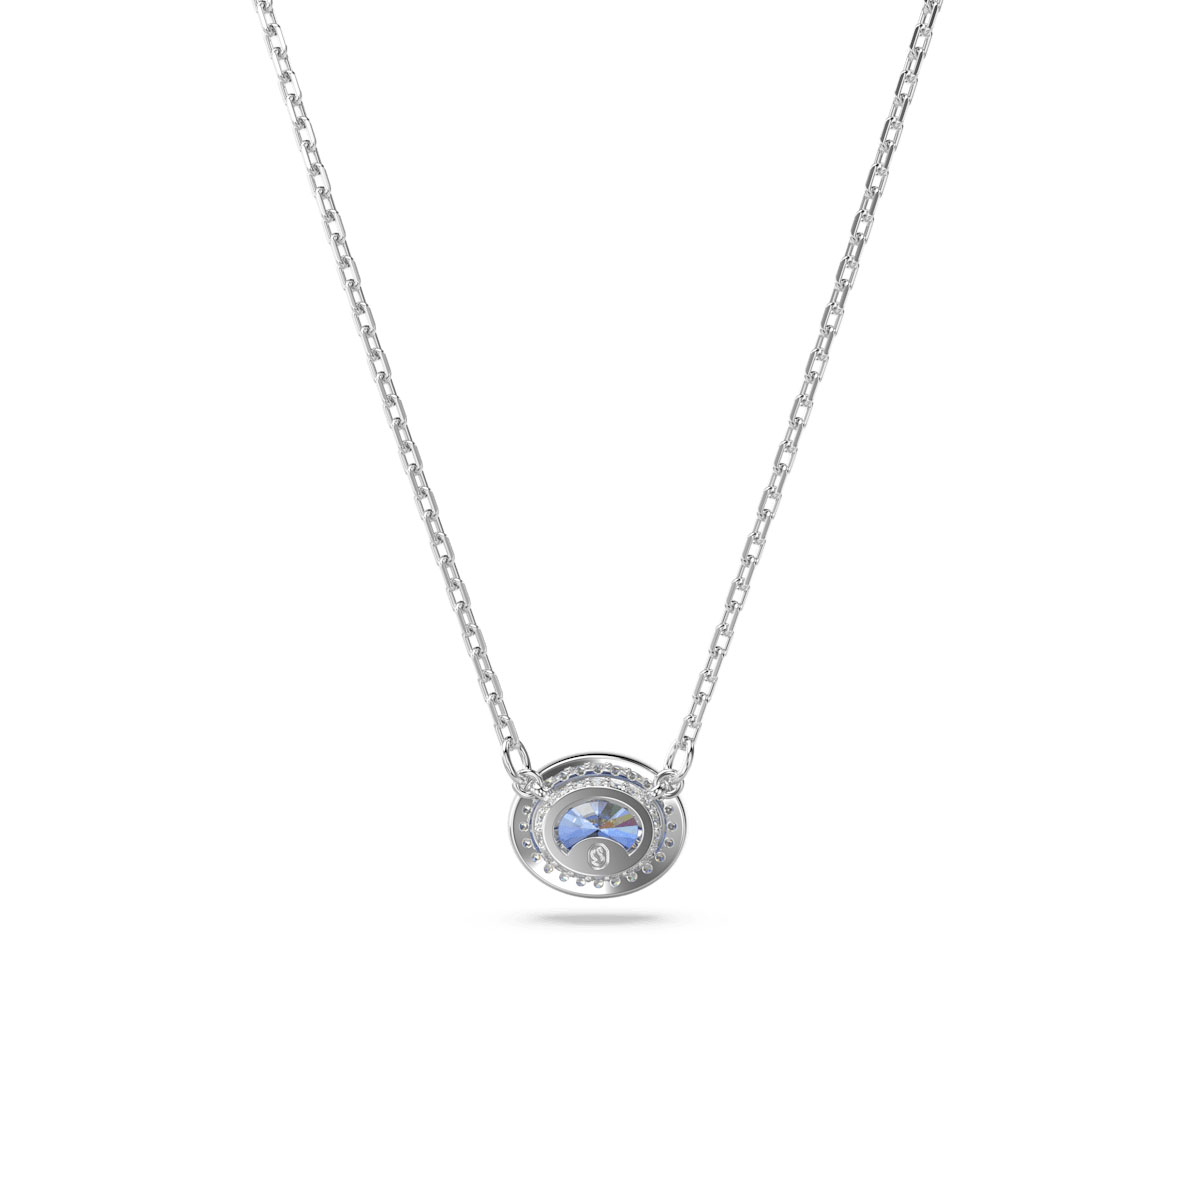 Swarovski Constella Oval Blue Crystal and Rhodium Pendant Necklace